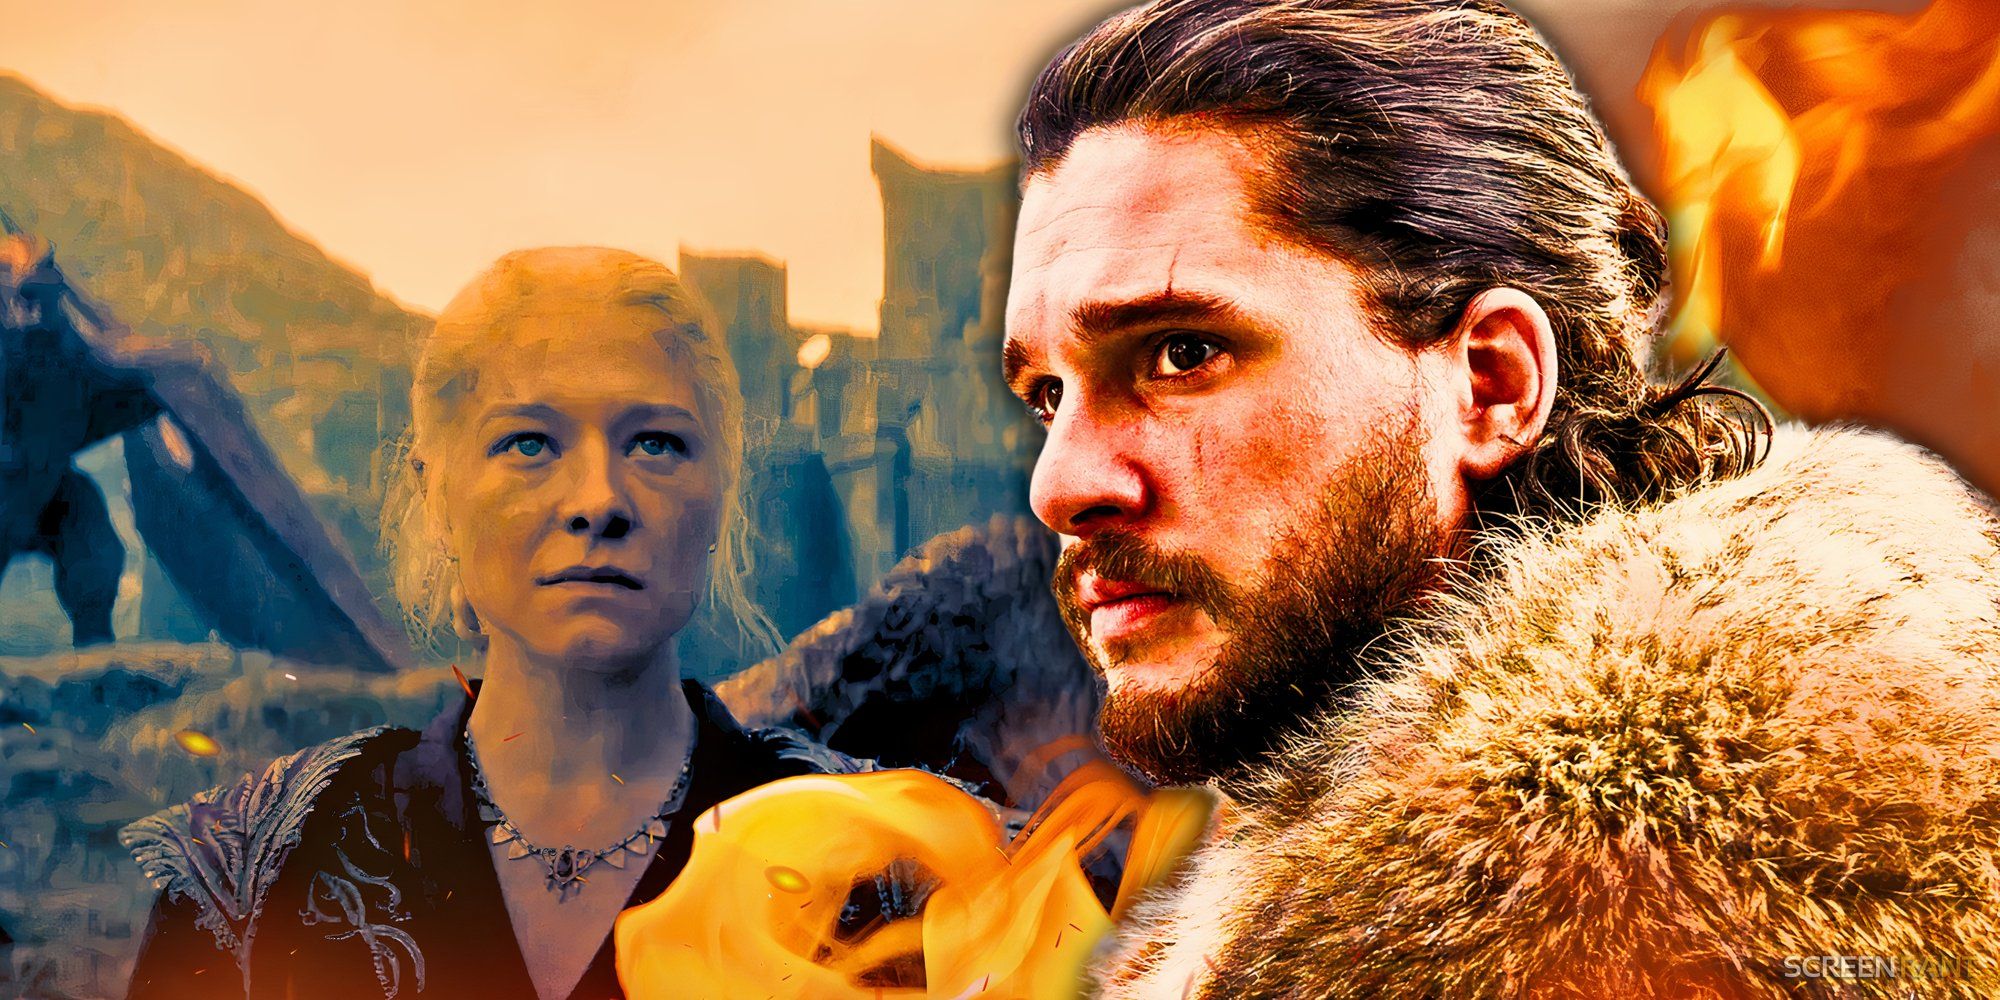 Jon Snow in Game of Thrones with Rhaenyra Targaryen in the background